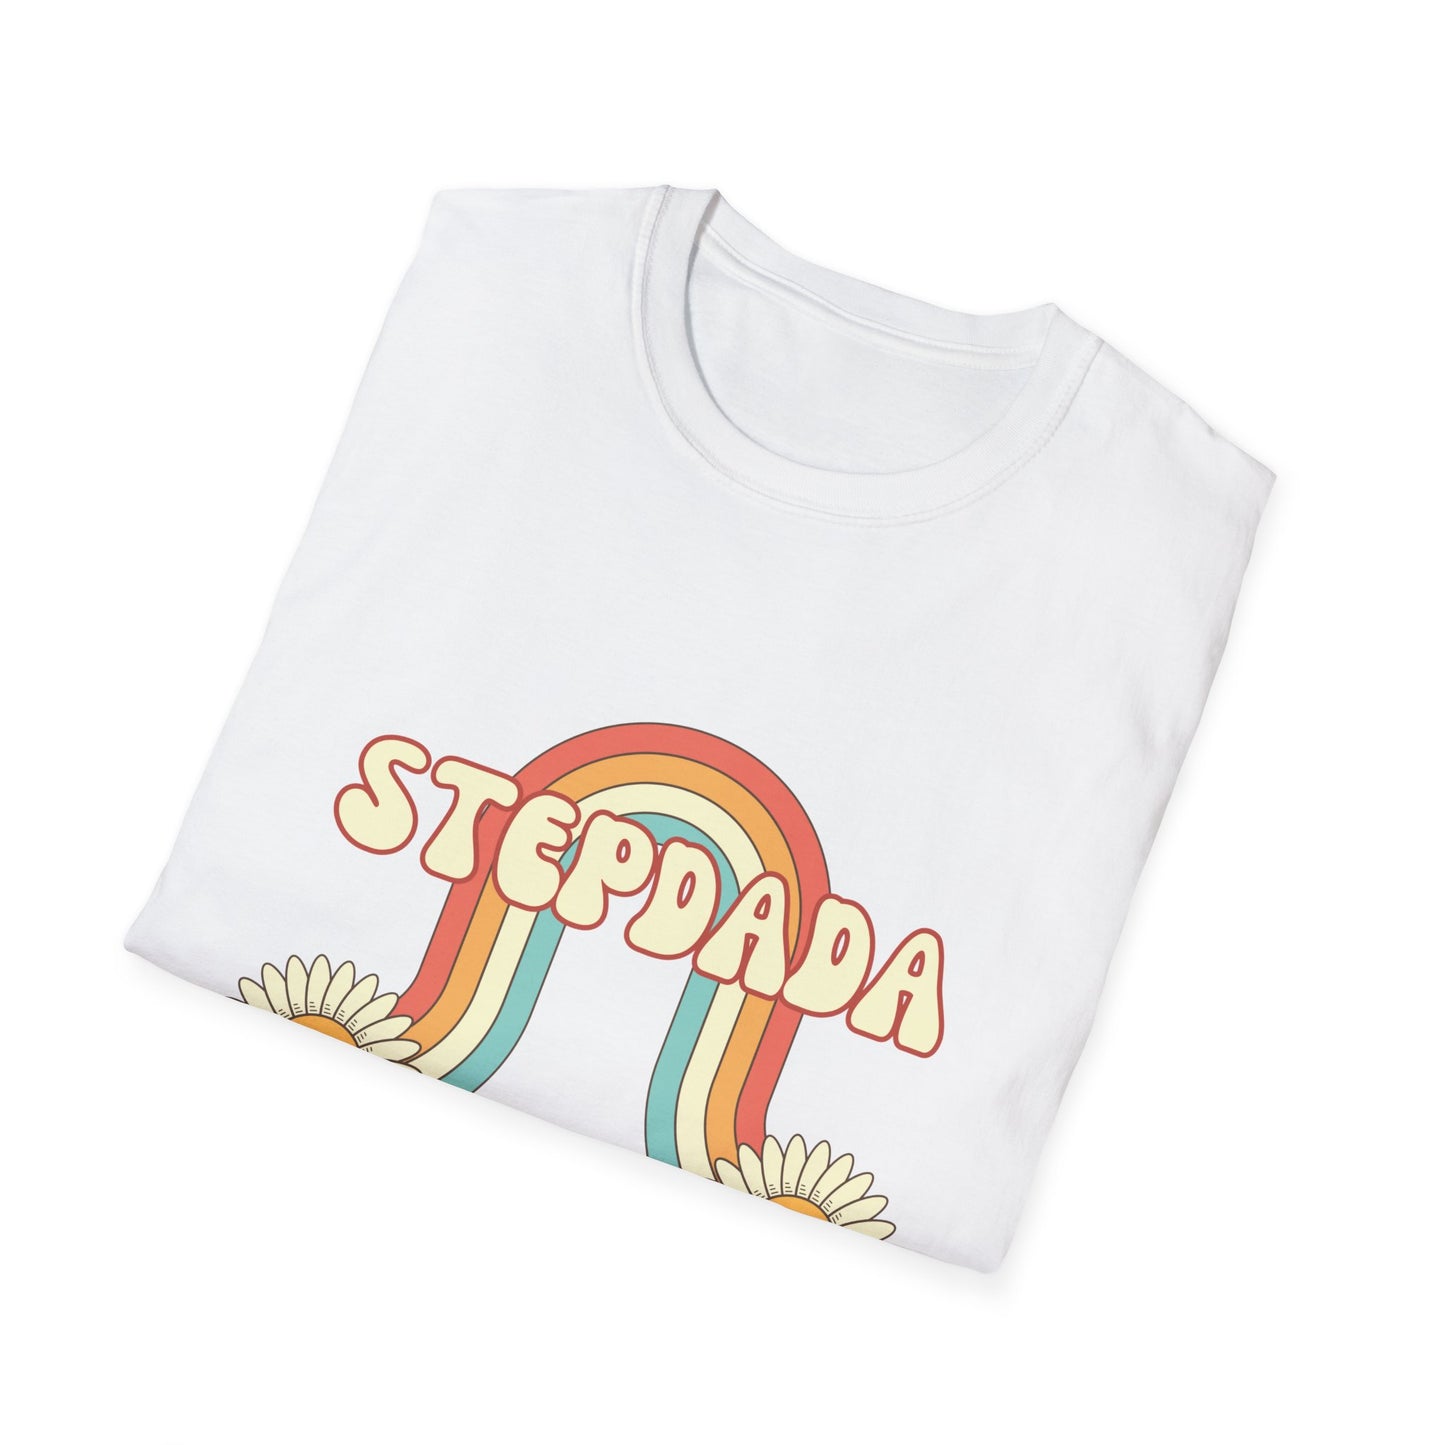 STEPDADA T-Shirt - adult